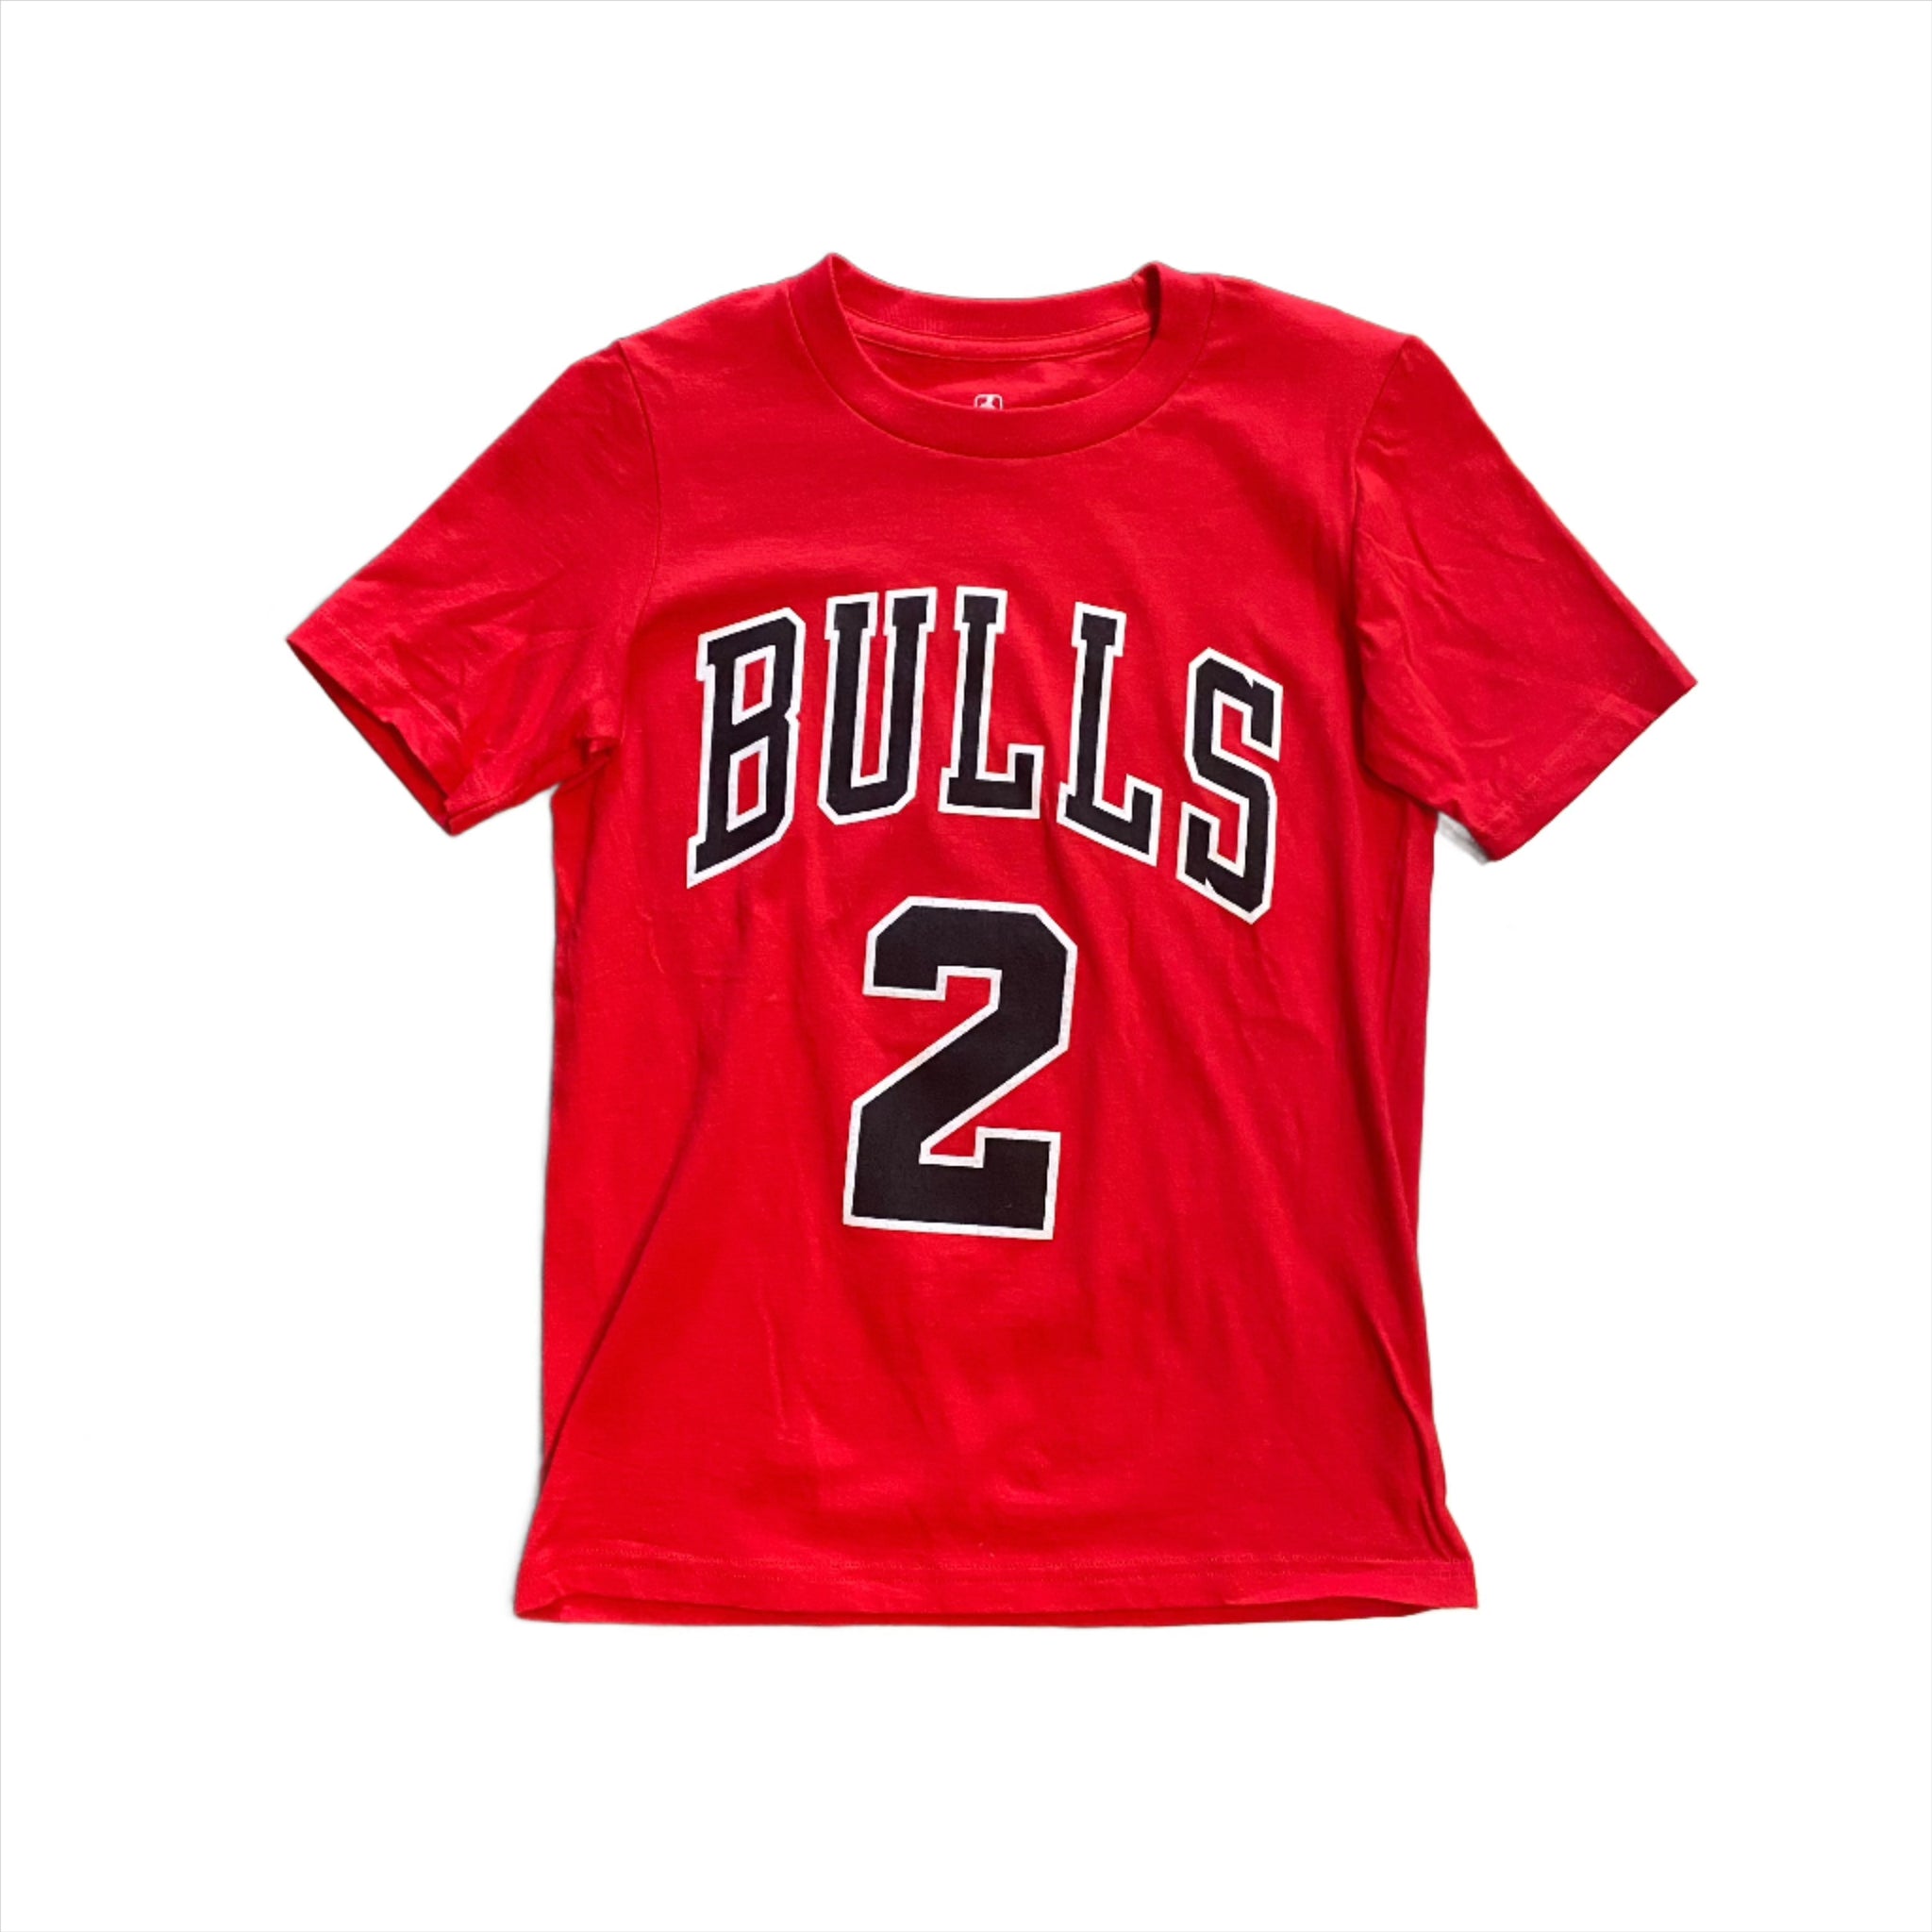 chicago bulls 23 t shirt